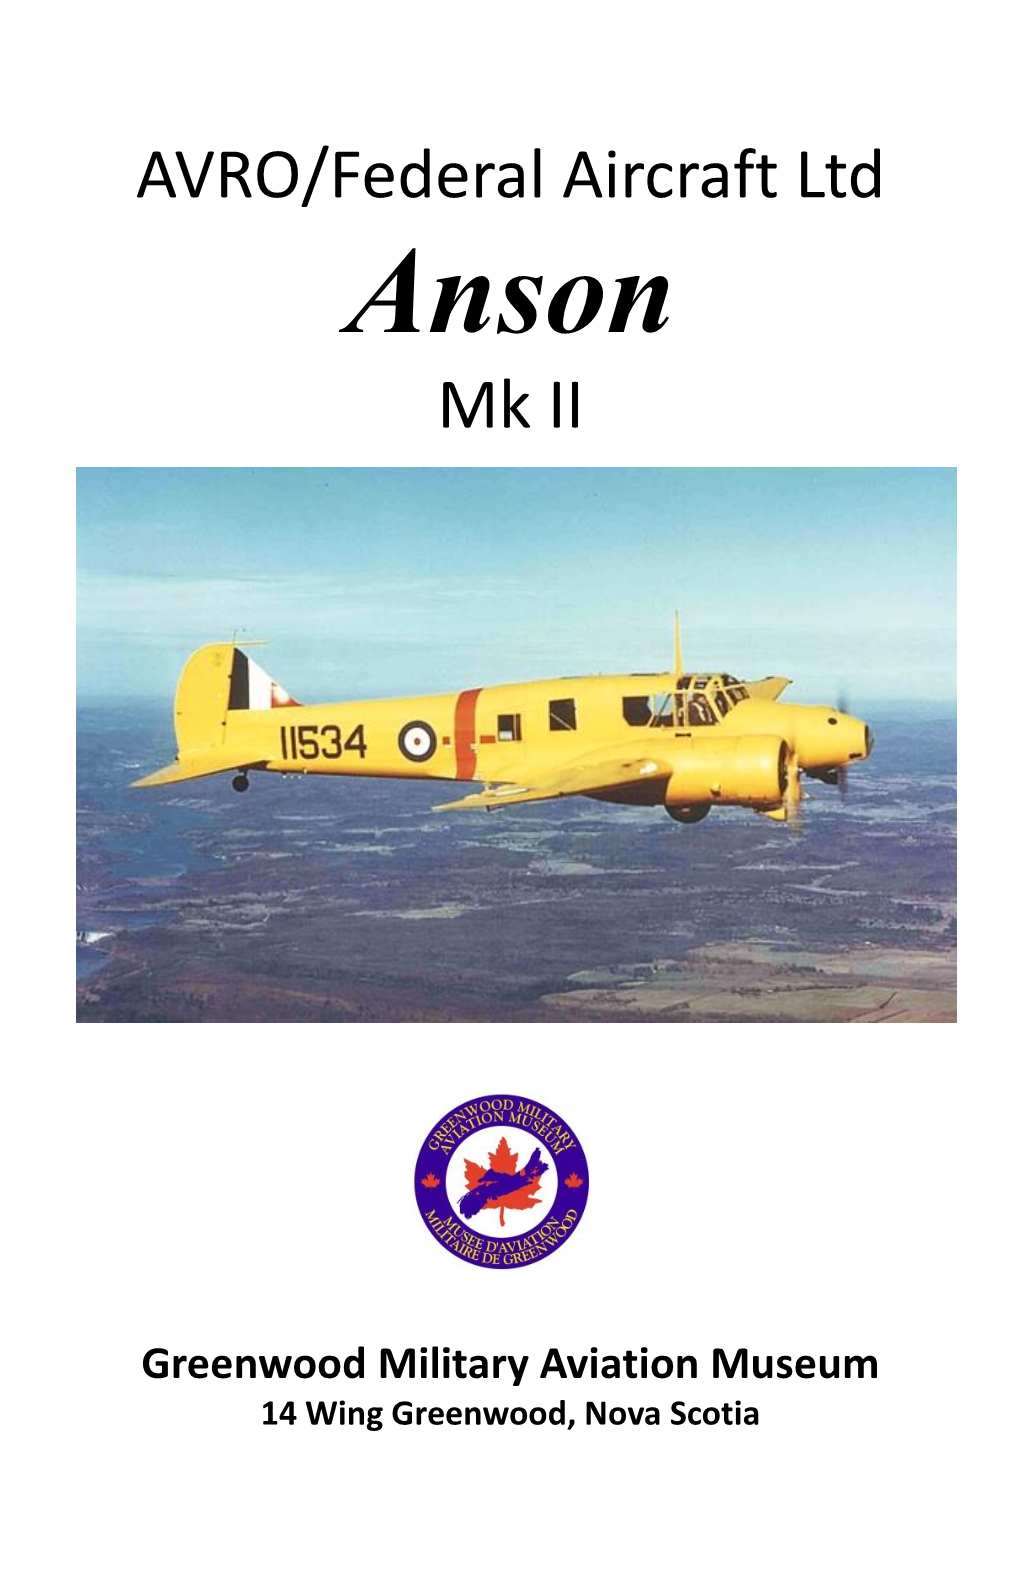 AVRO/Federal Aircraft Ltd Mk II